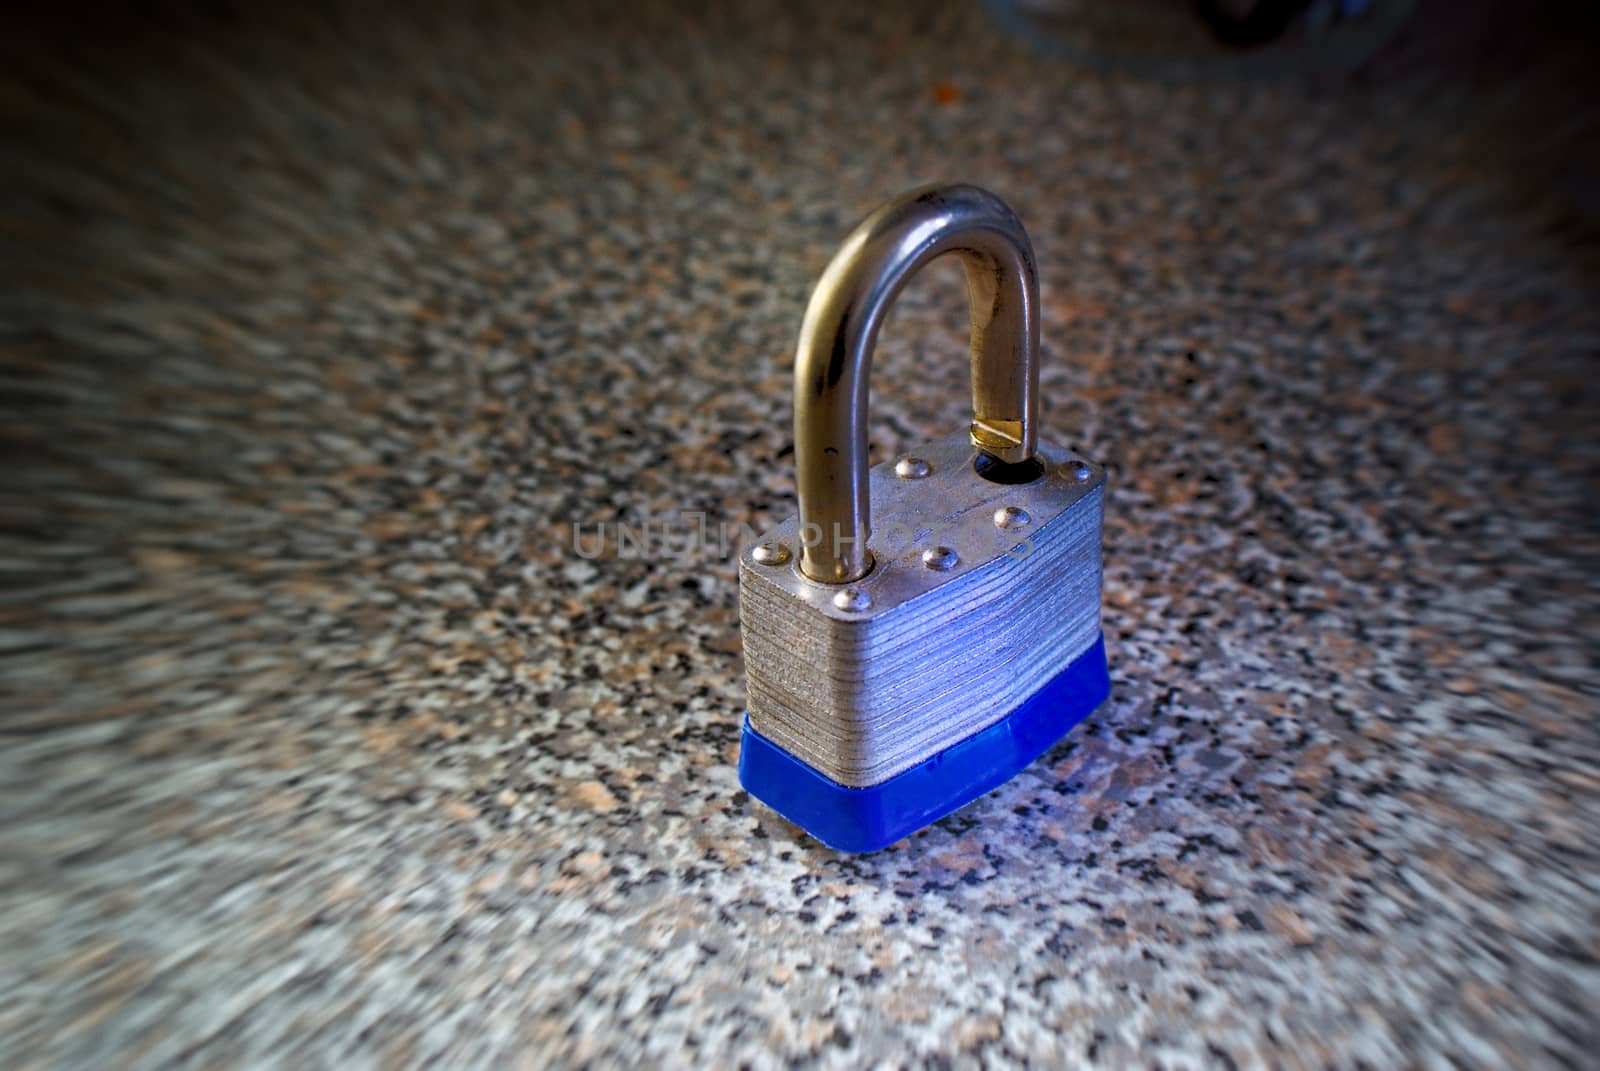 Photograph of a steel open padlock